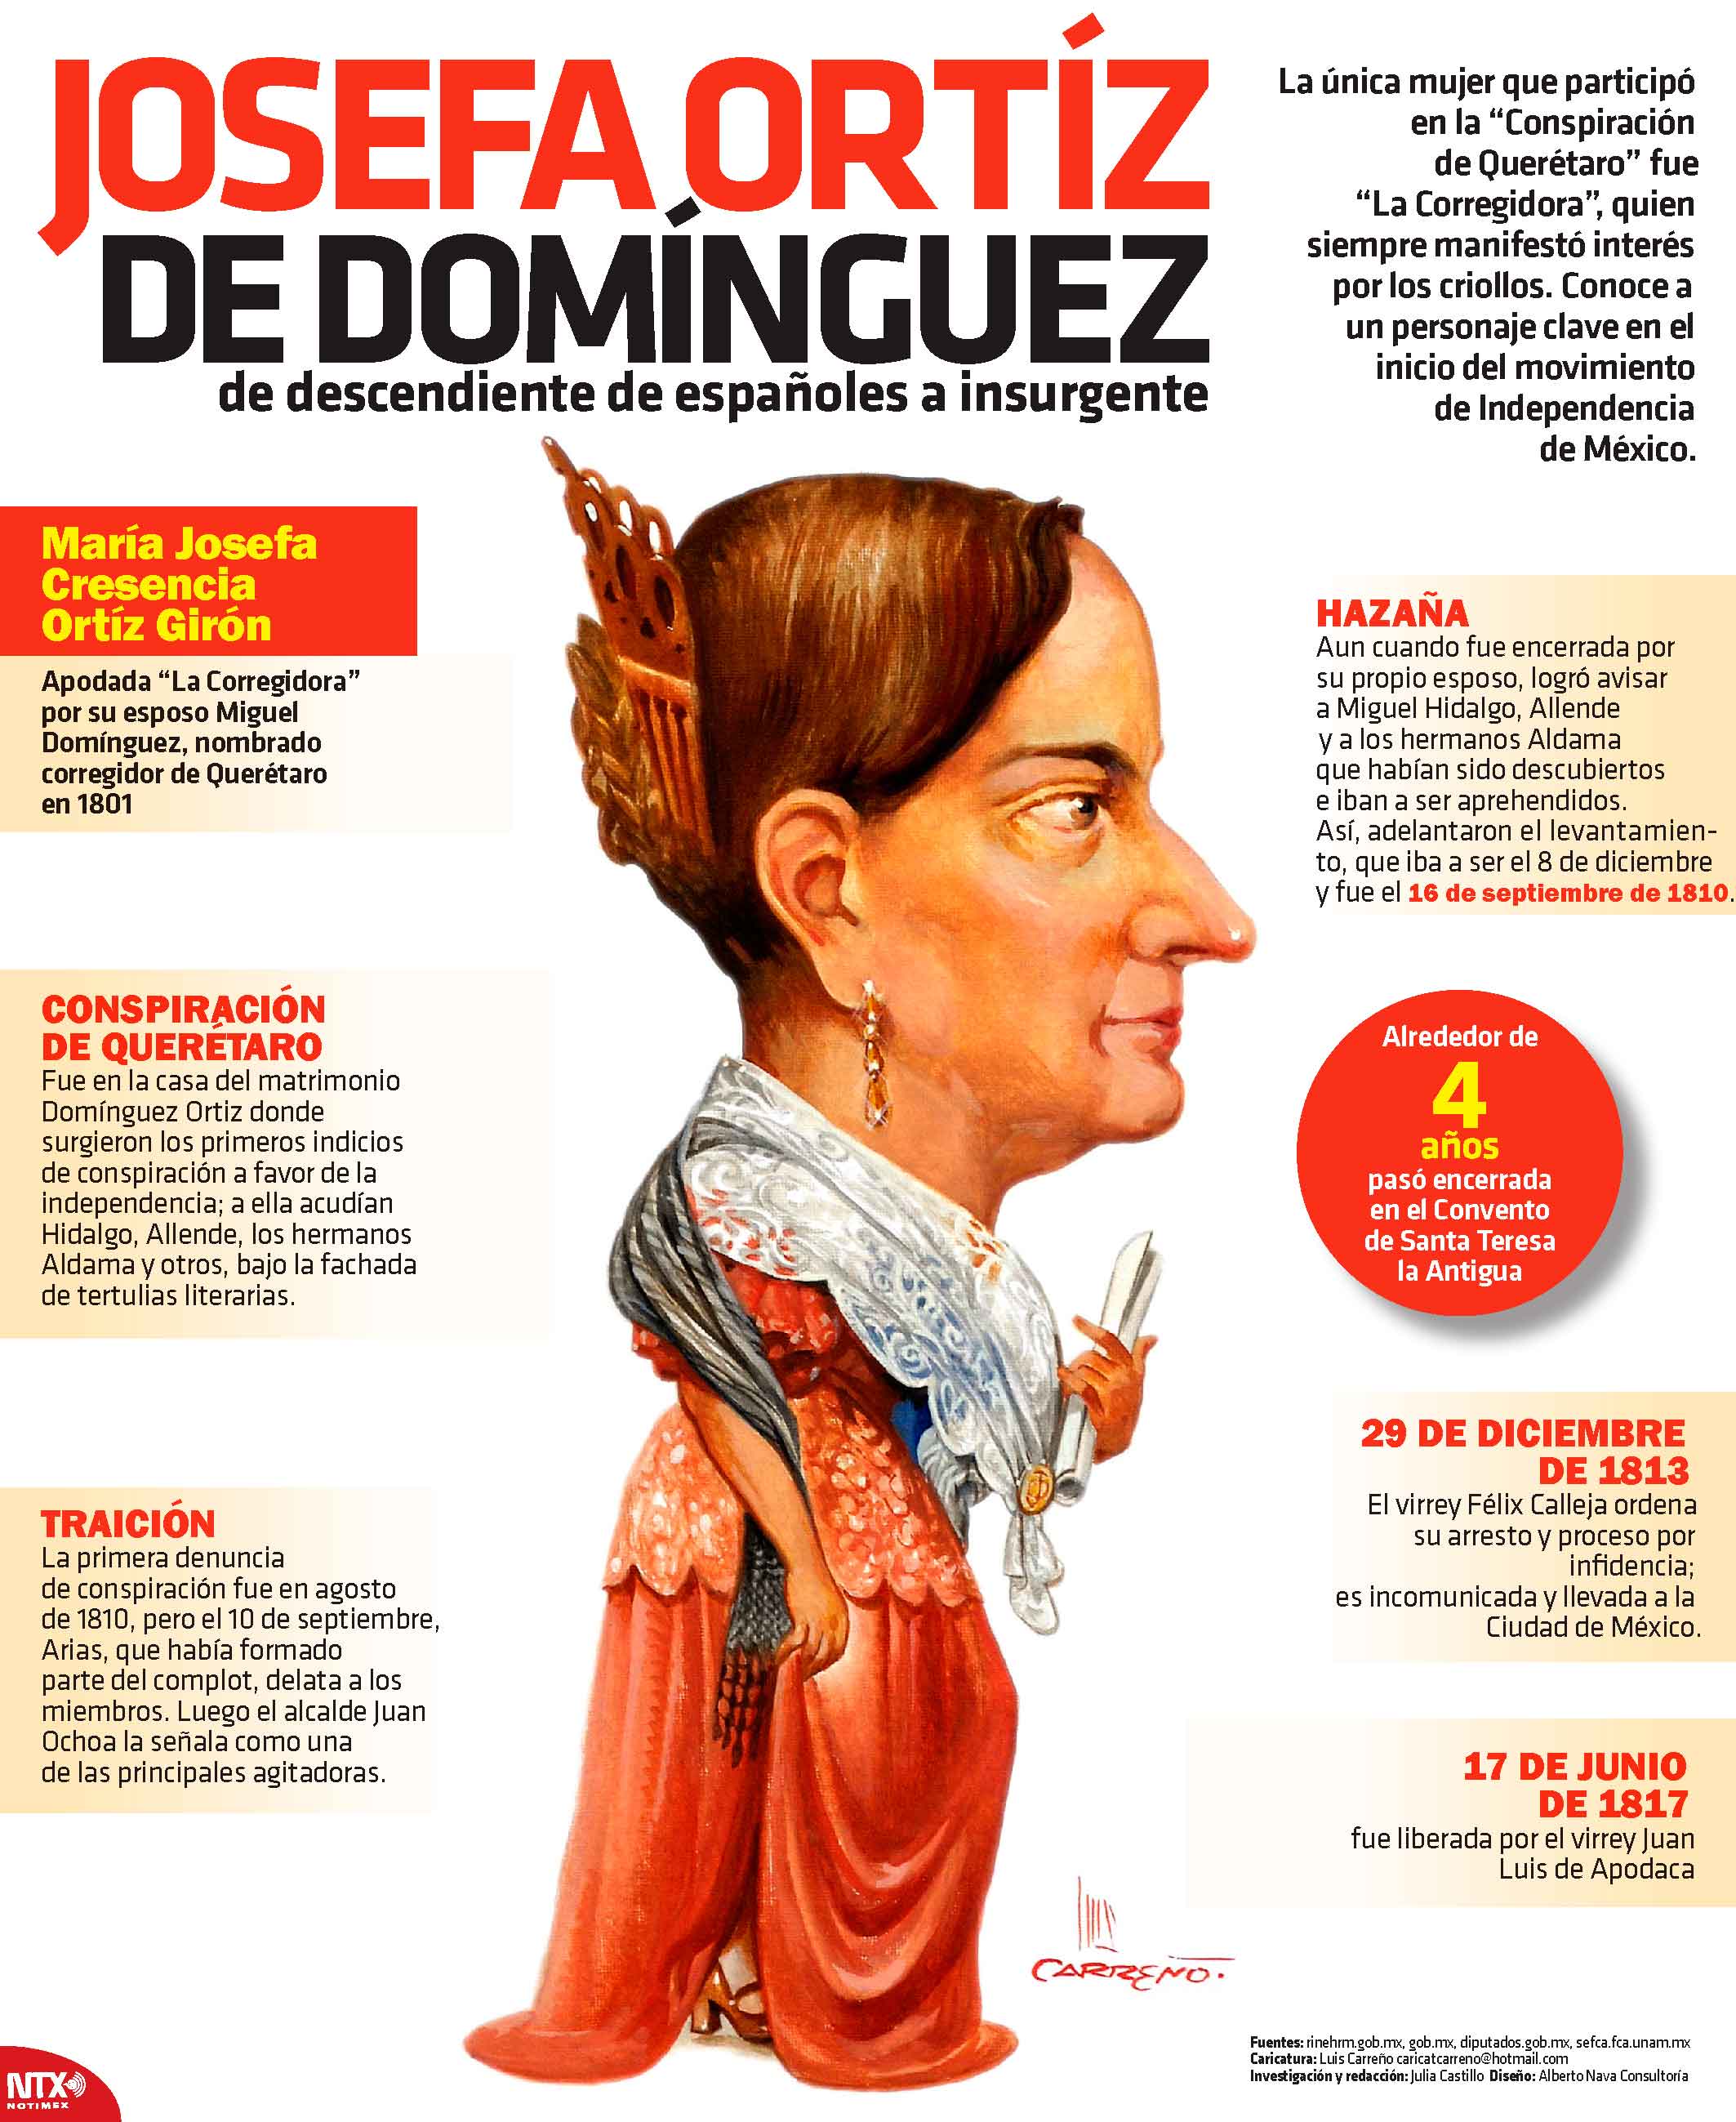 Josefa Ortz de Domnguez